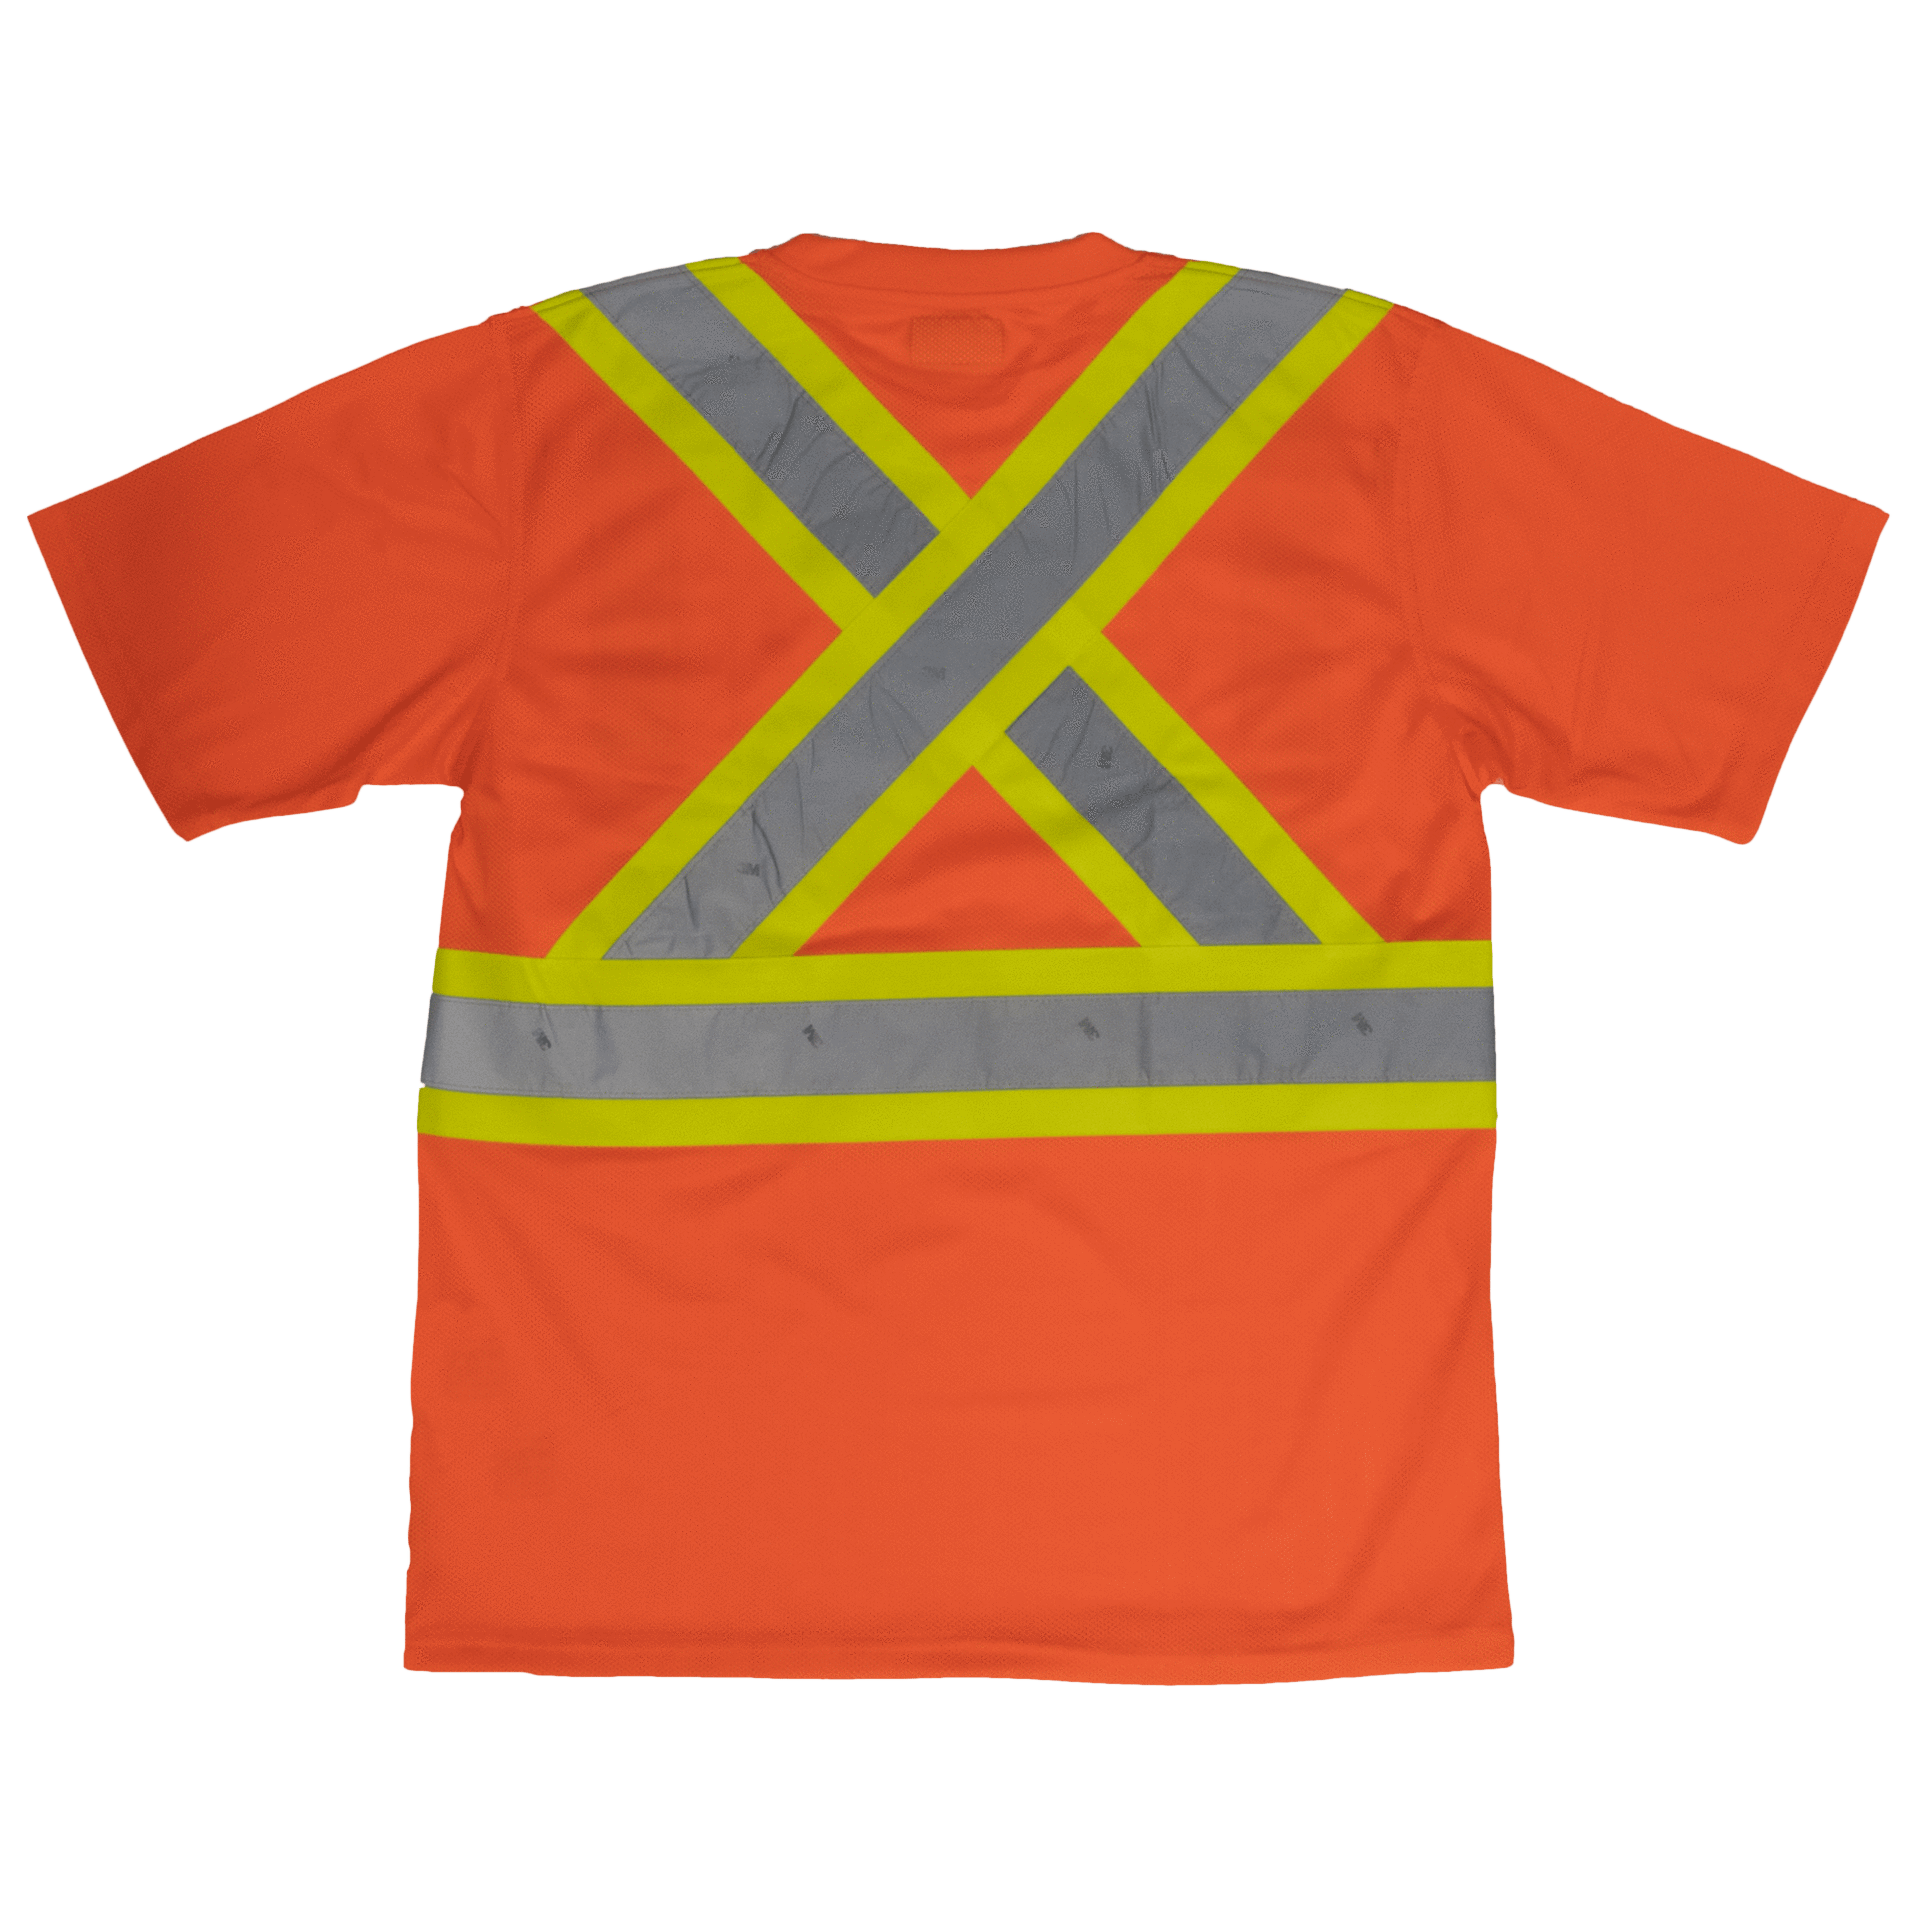 Tough Duck Short Sleeve Safety T-Shirt - S392 - Fluorescent Orange - back